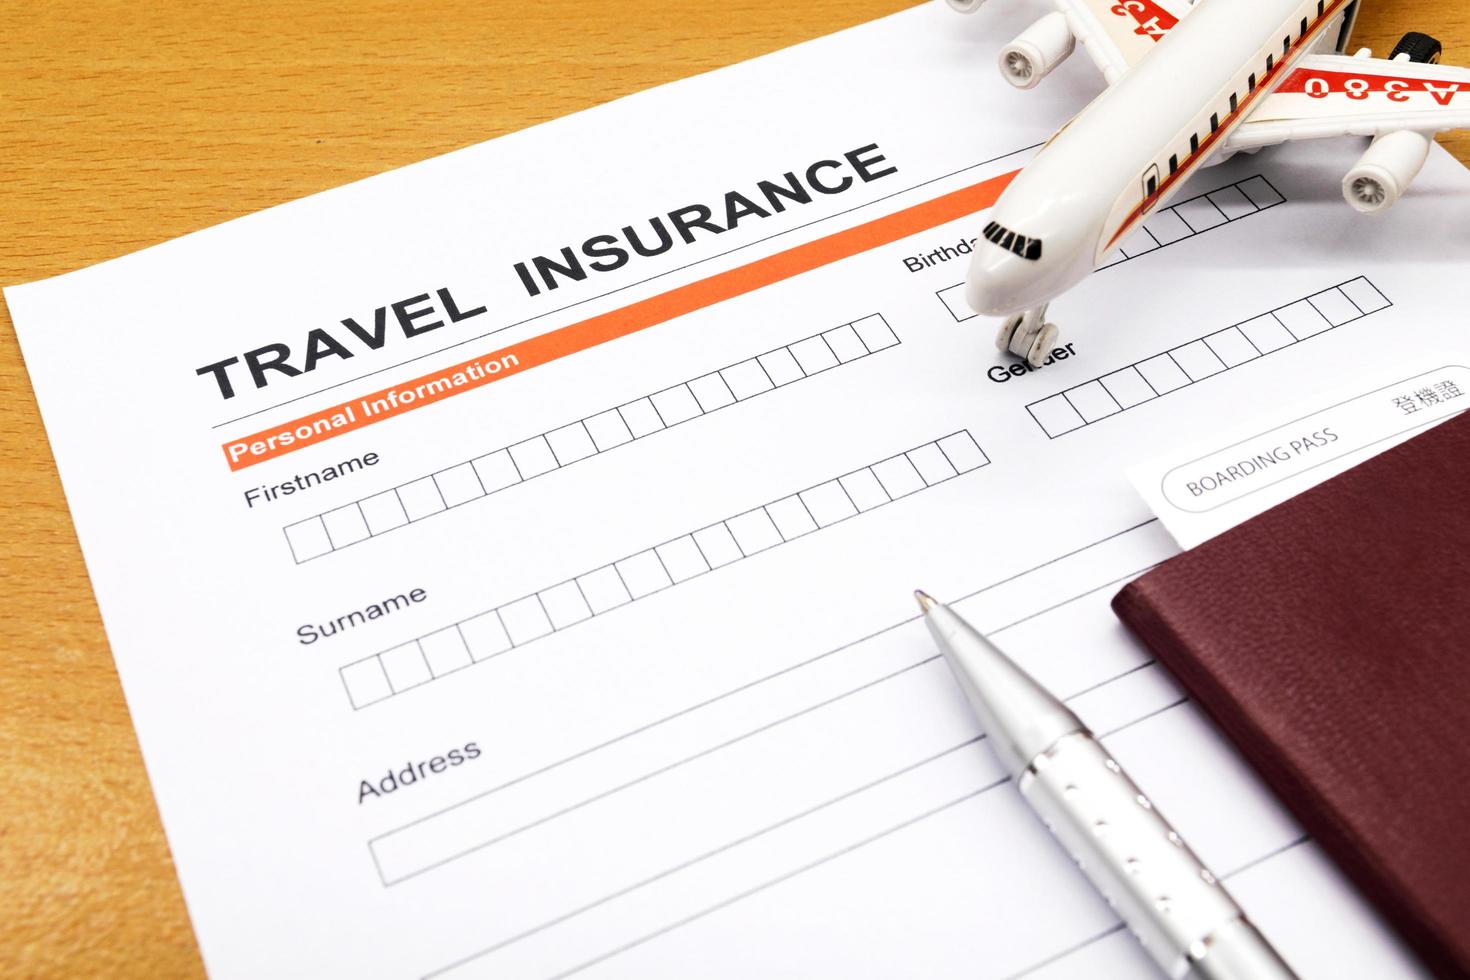 Travel insurance application form photo